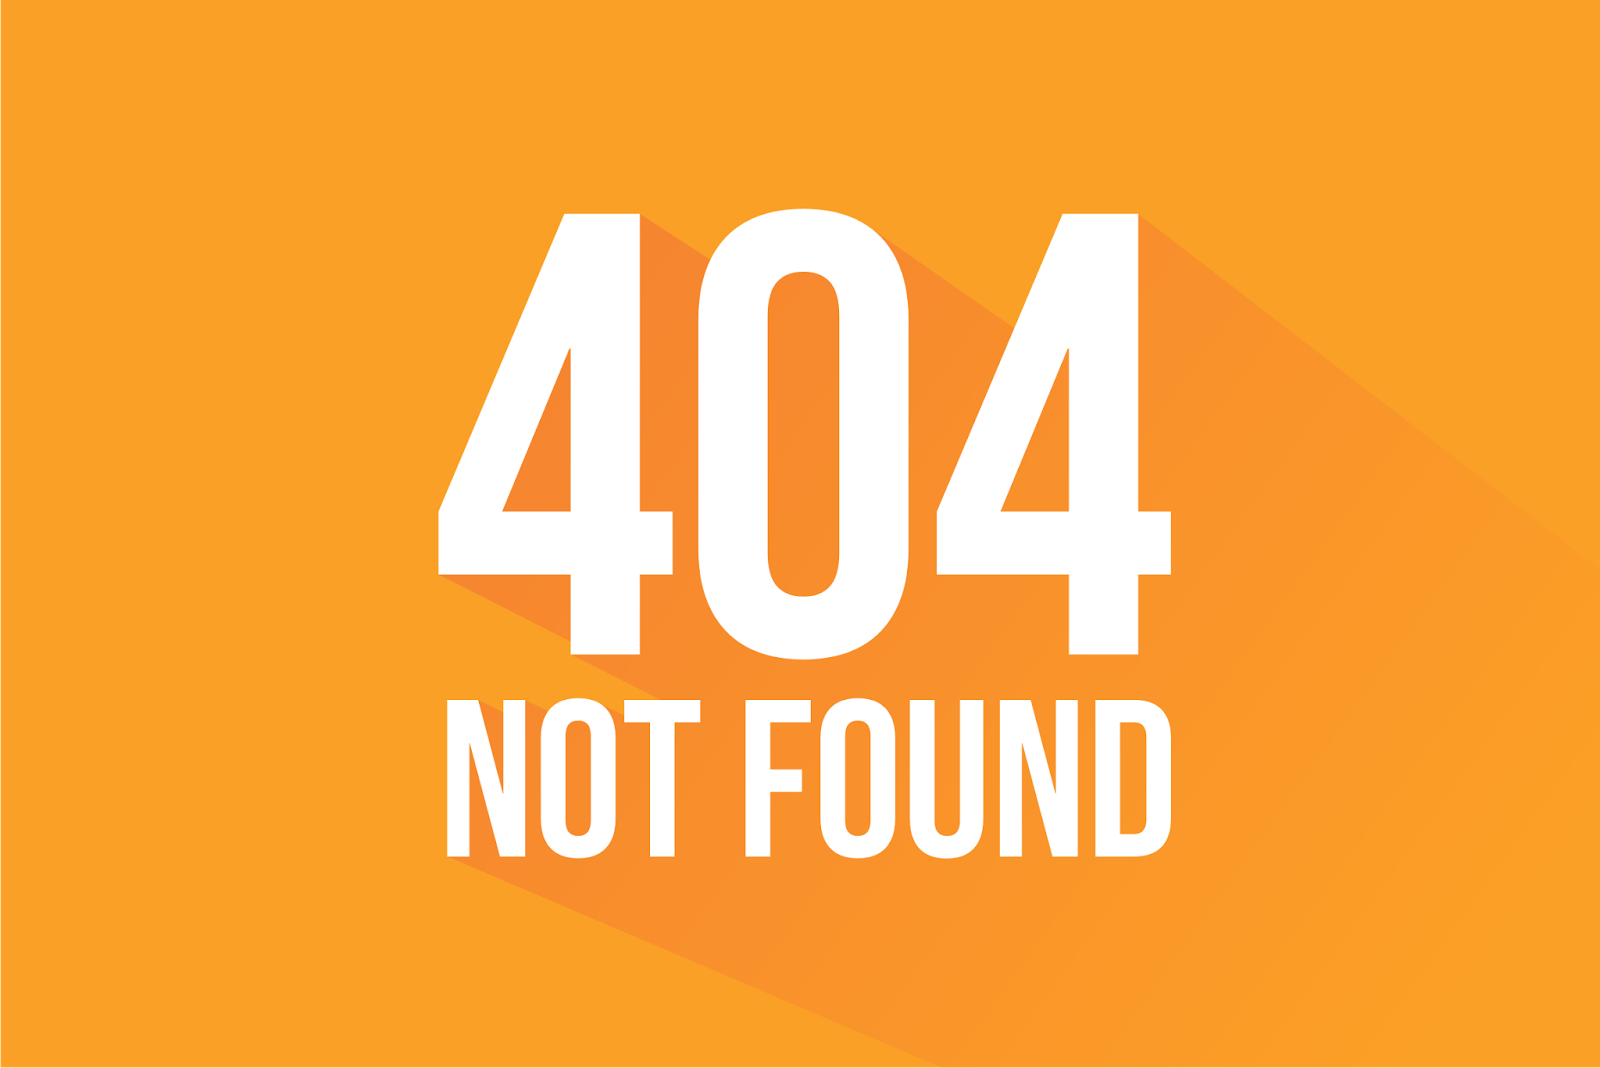 Find me перевести. 404 Not found. Картинка not found. 404 Нот фаунд. Картинка 404.